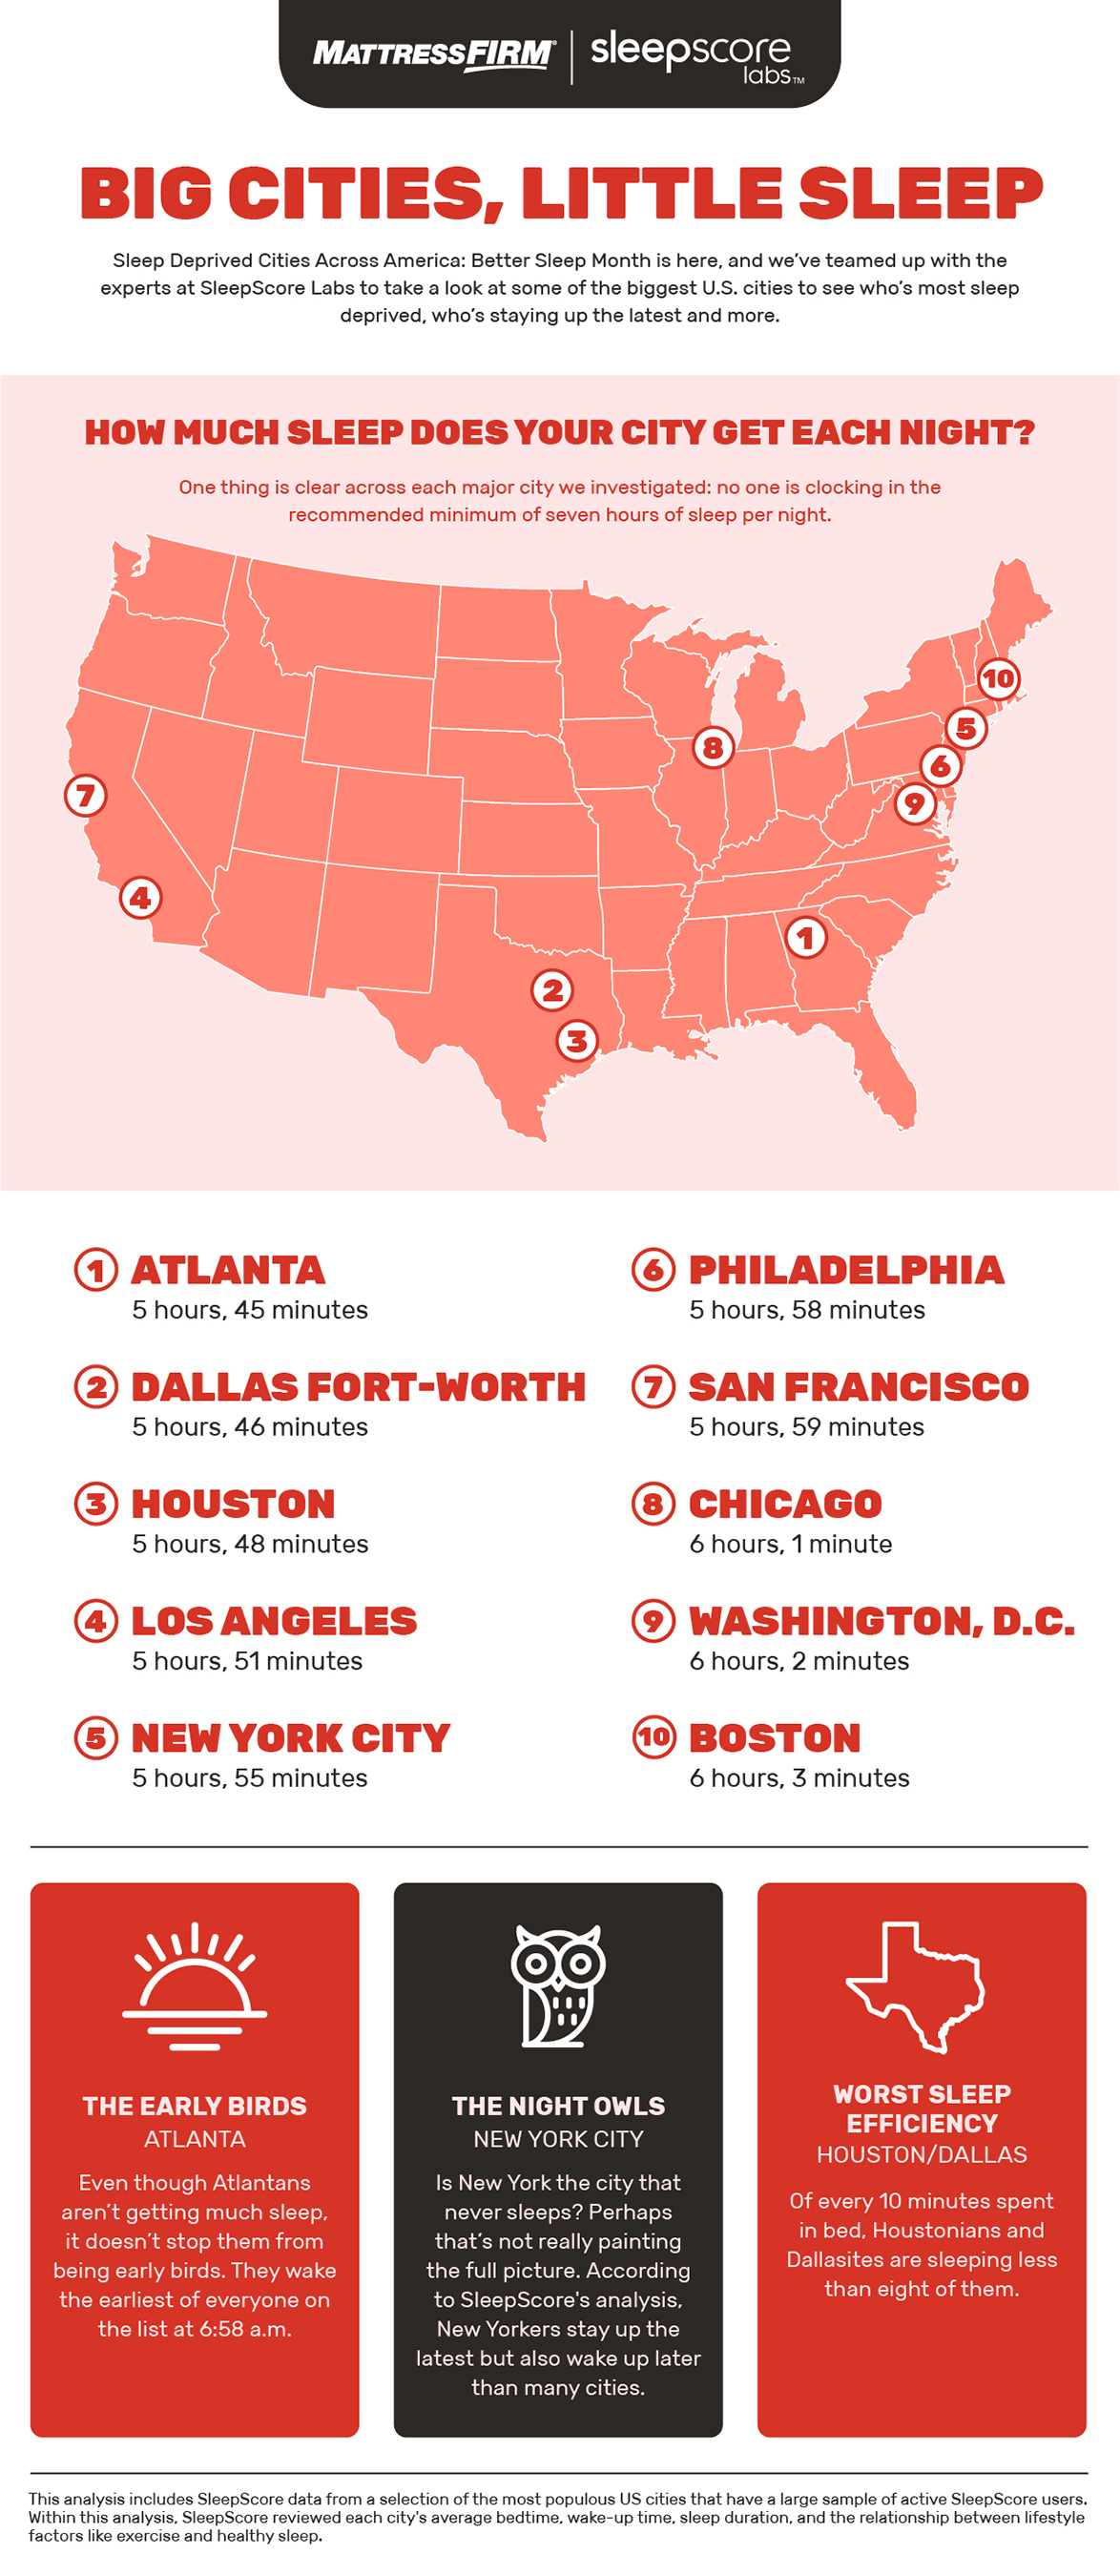 Mattress Firm and SleepScore Labs Announce Sleep-Deprived Cities Across America